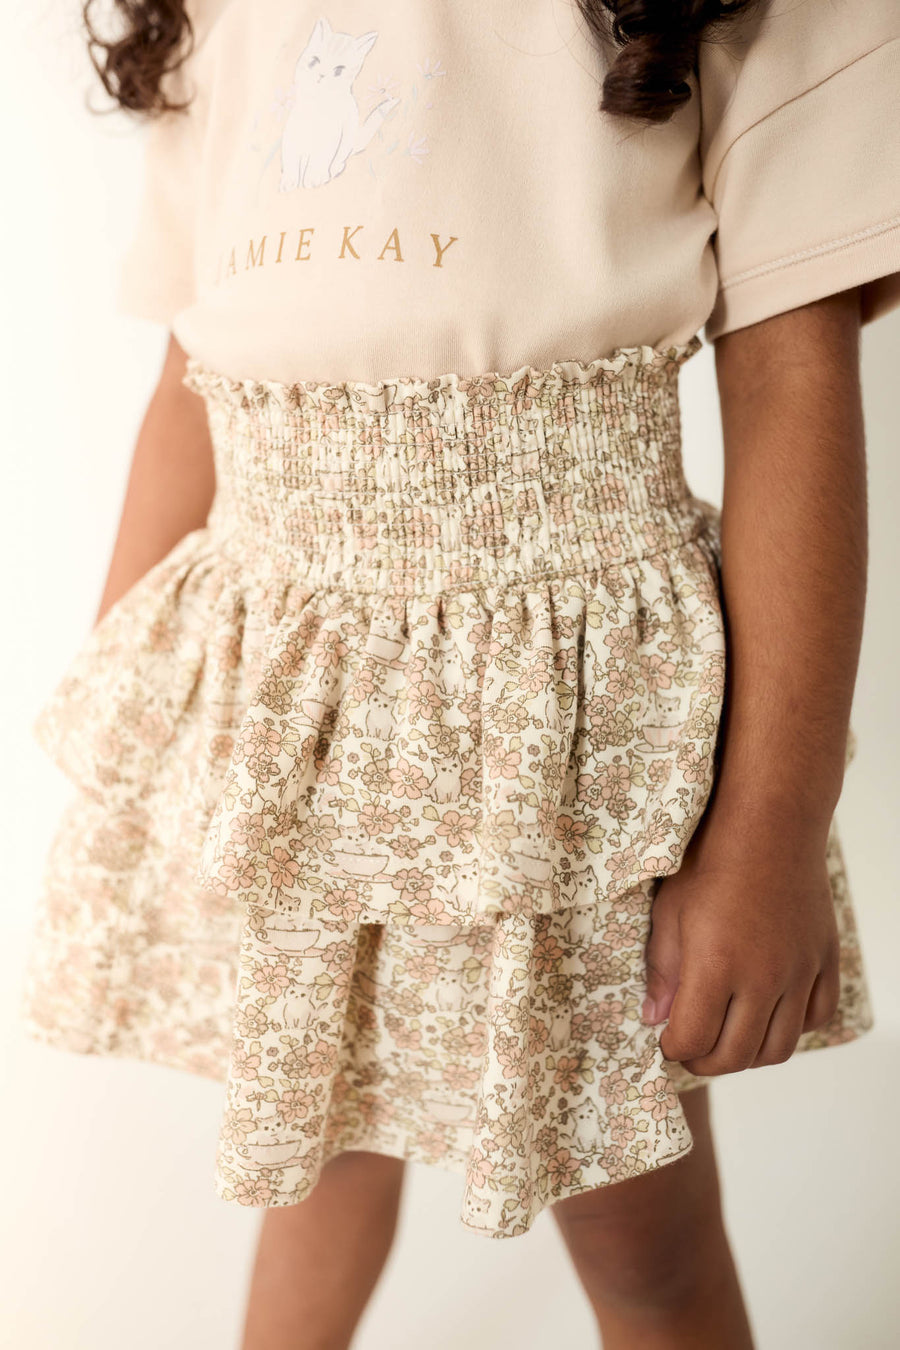 Organic Cotton Ruby Skirt - Kitty Chloe Childrens Skirt from Jamie Kay NZ